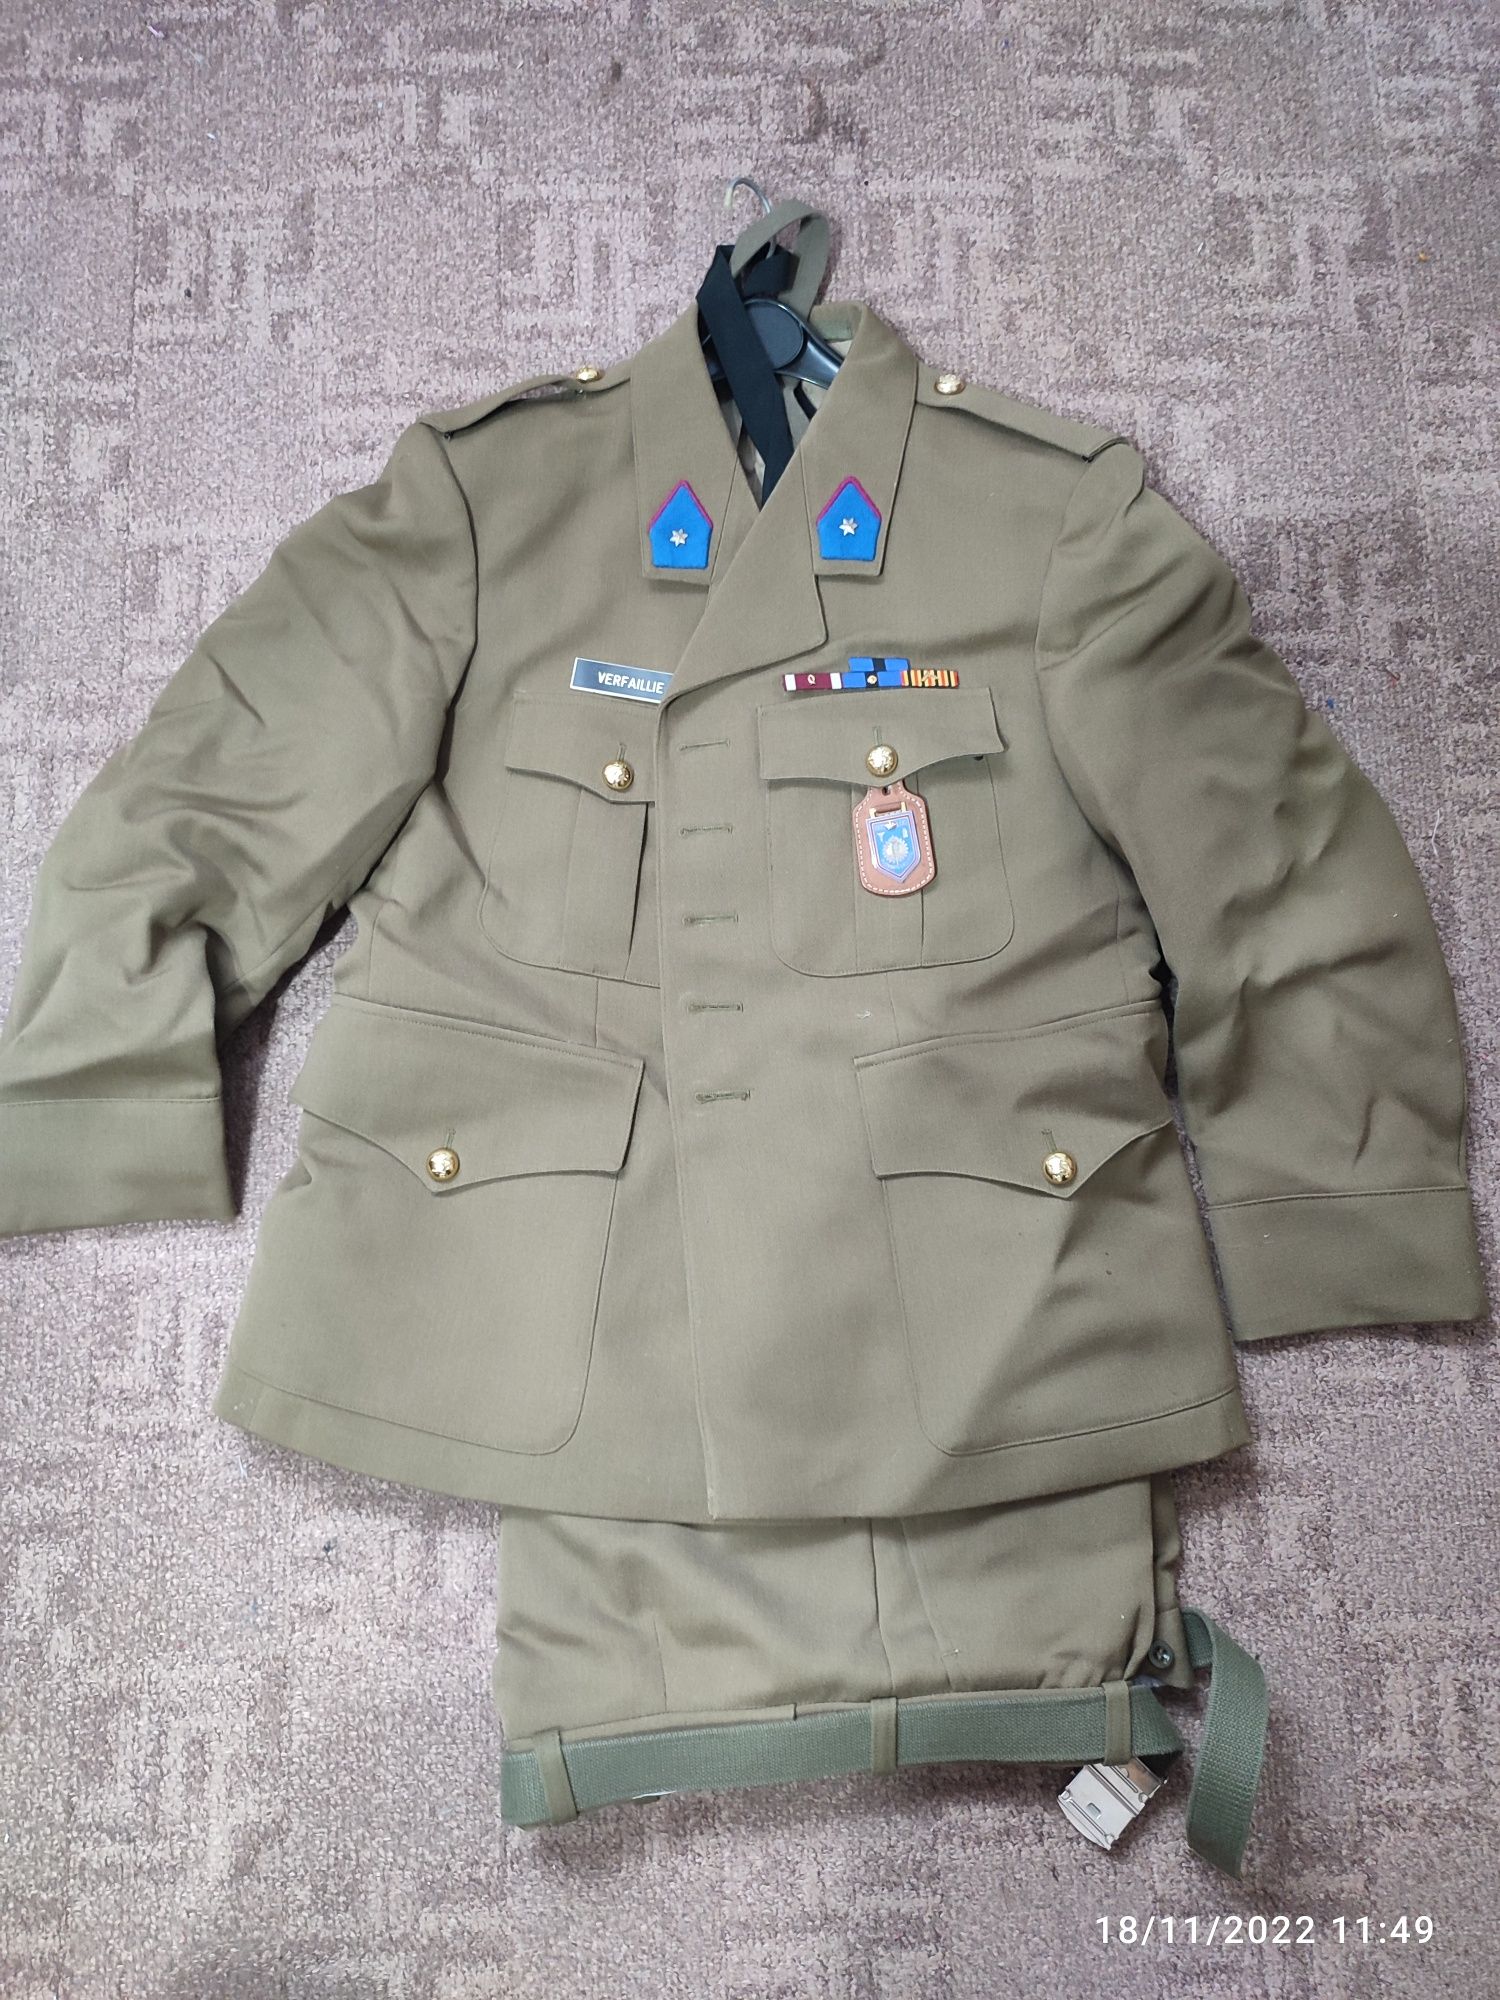 Vand uniforma militara din Belgia